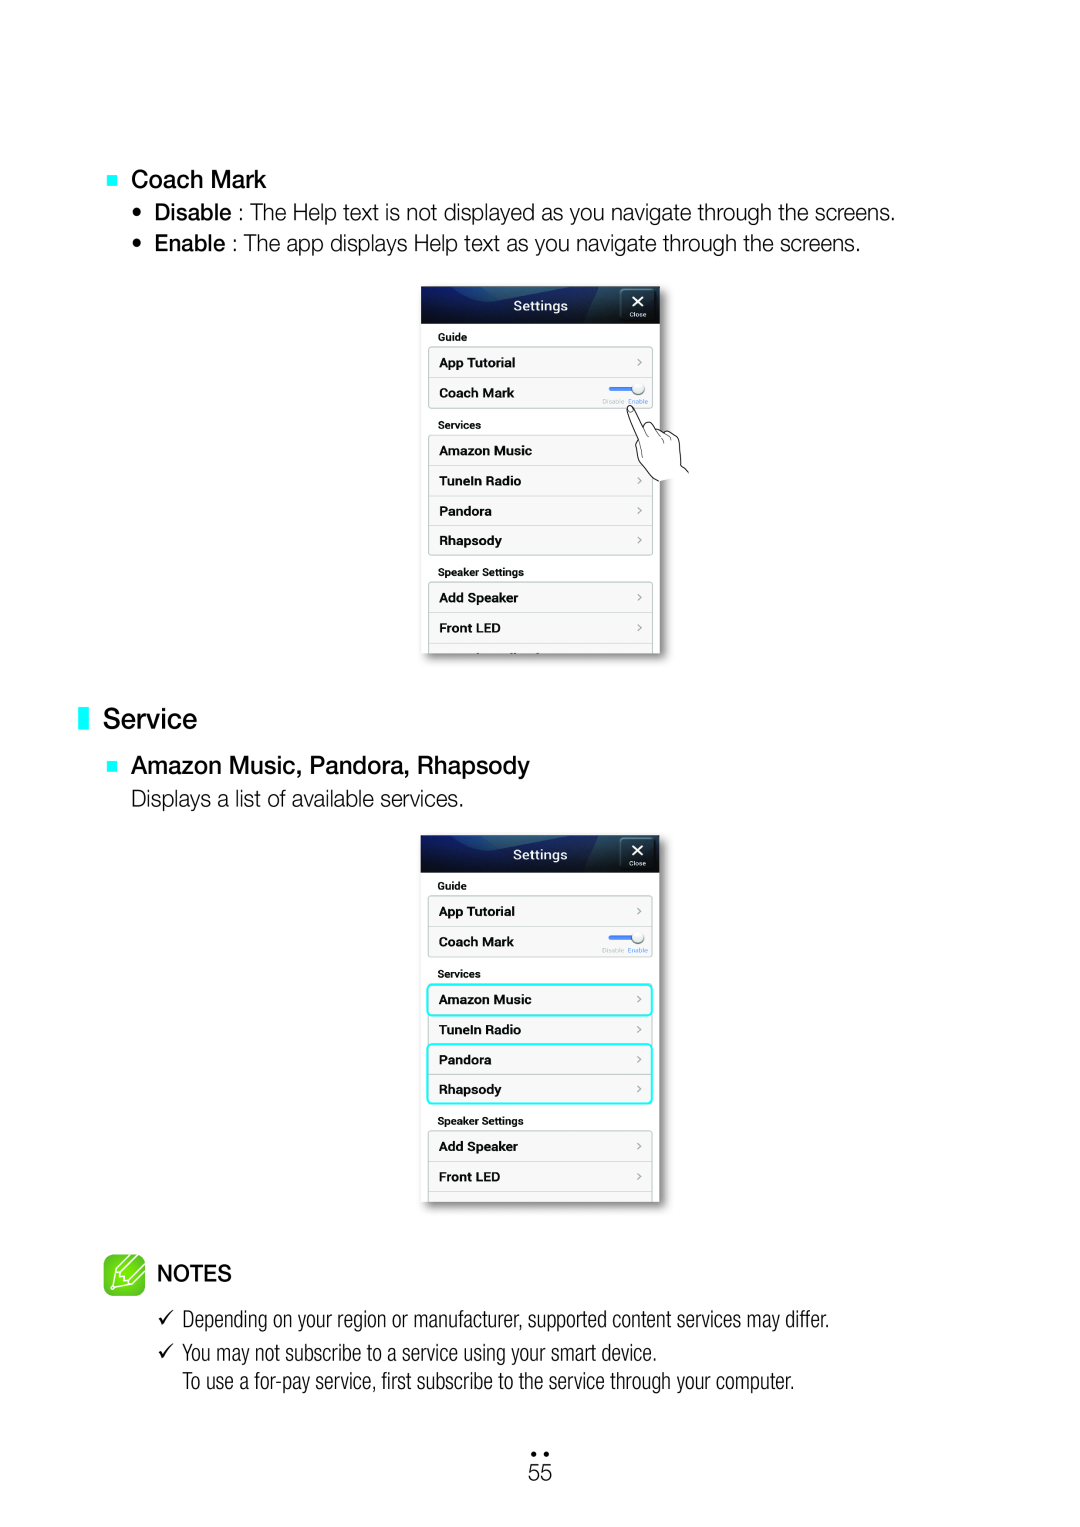 Samsung M5 user manual Service, `` Coach Mark, `` Amazon Music, Pandora, Rhapsody 